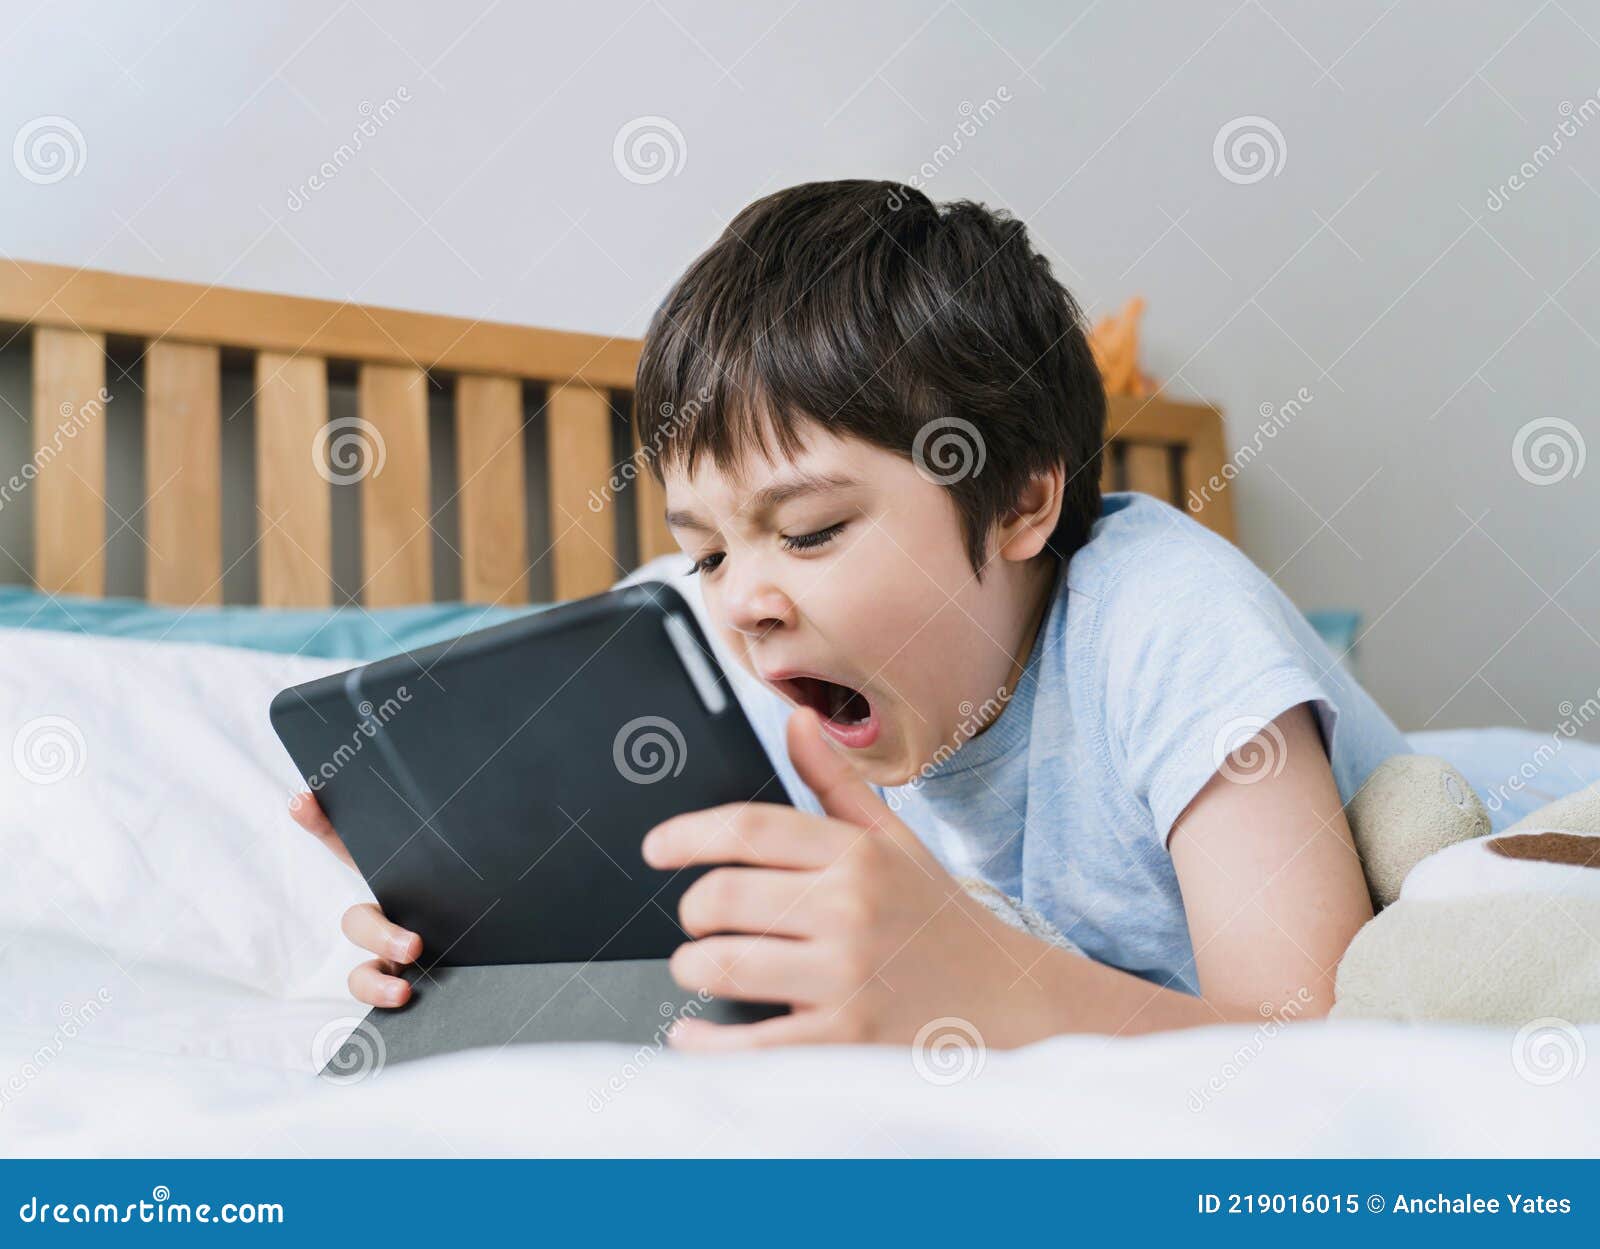 Portrait Sleepy Boy Yawning While Watching Cartoon Or Play Games On